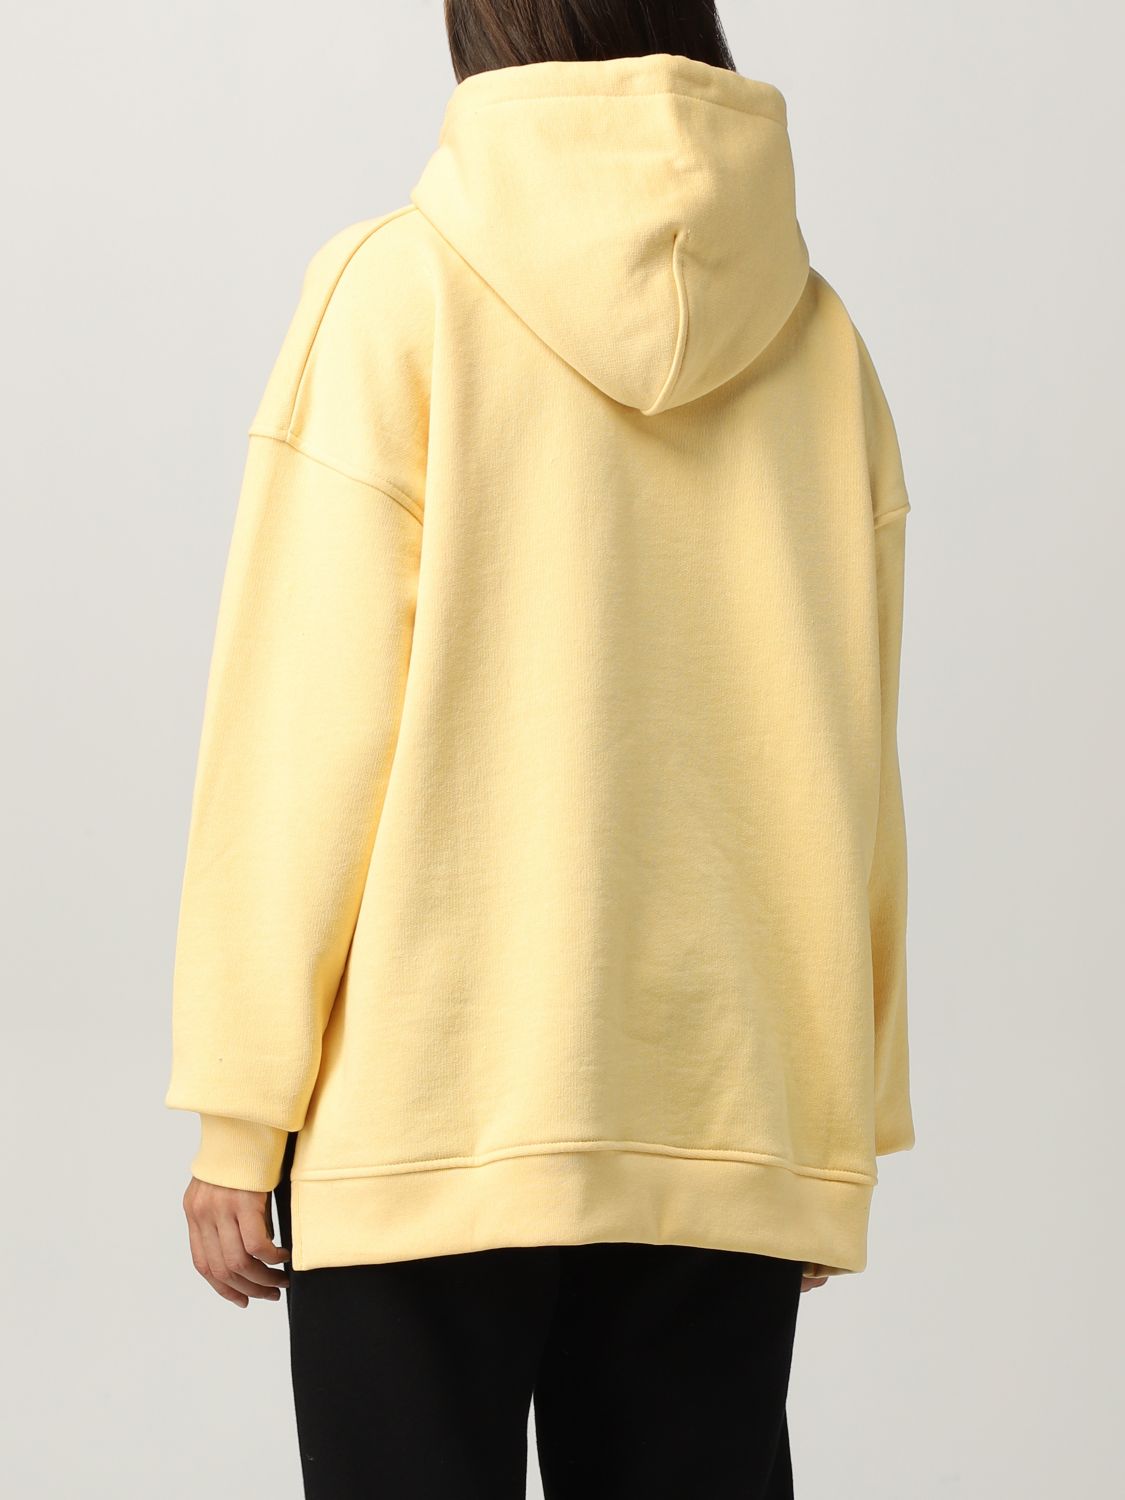 GANNI: Software hoodie with logo - Yellow | Ganni sweatshirt T2911 ...